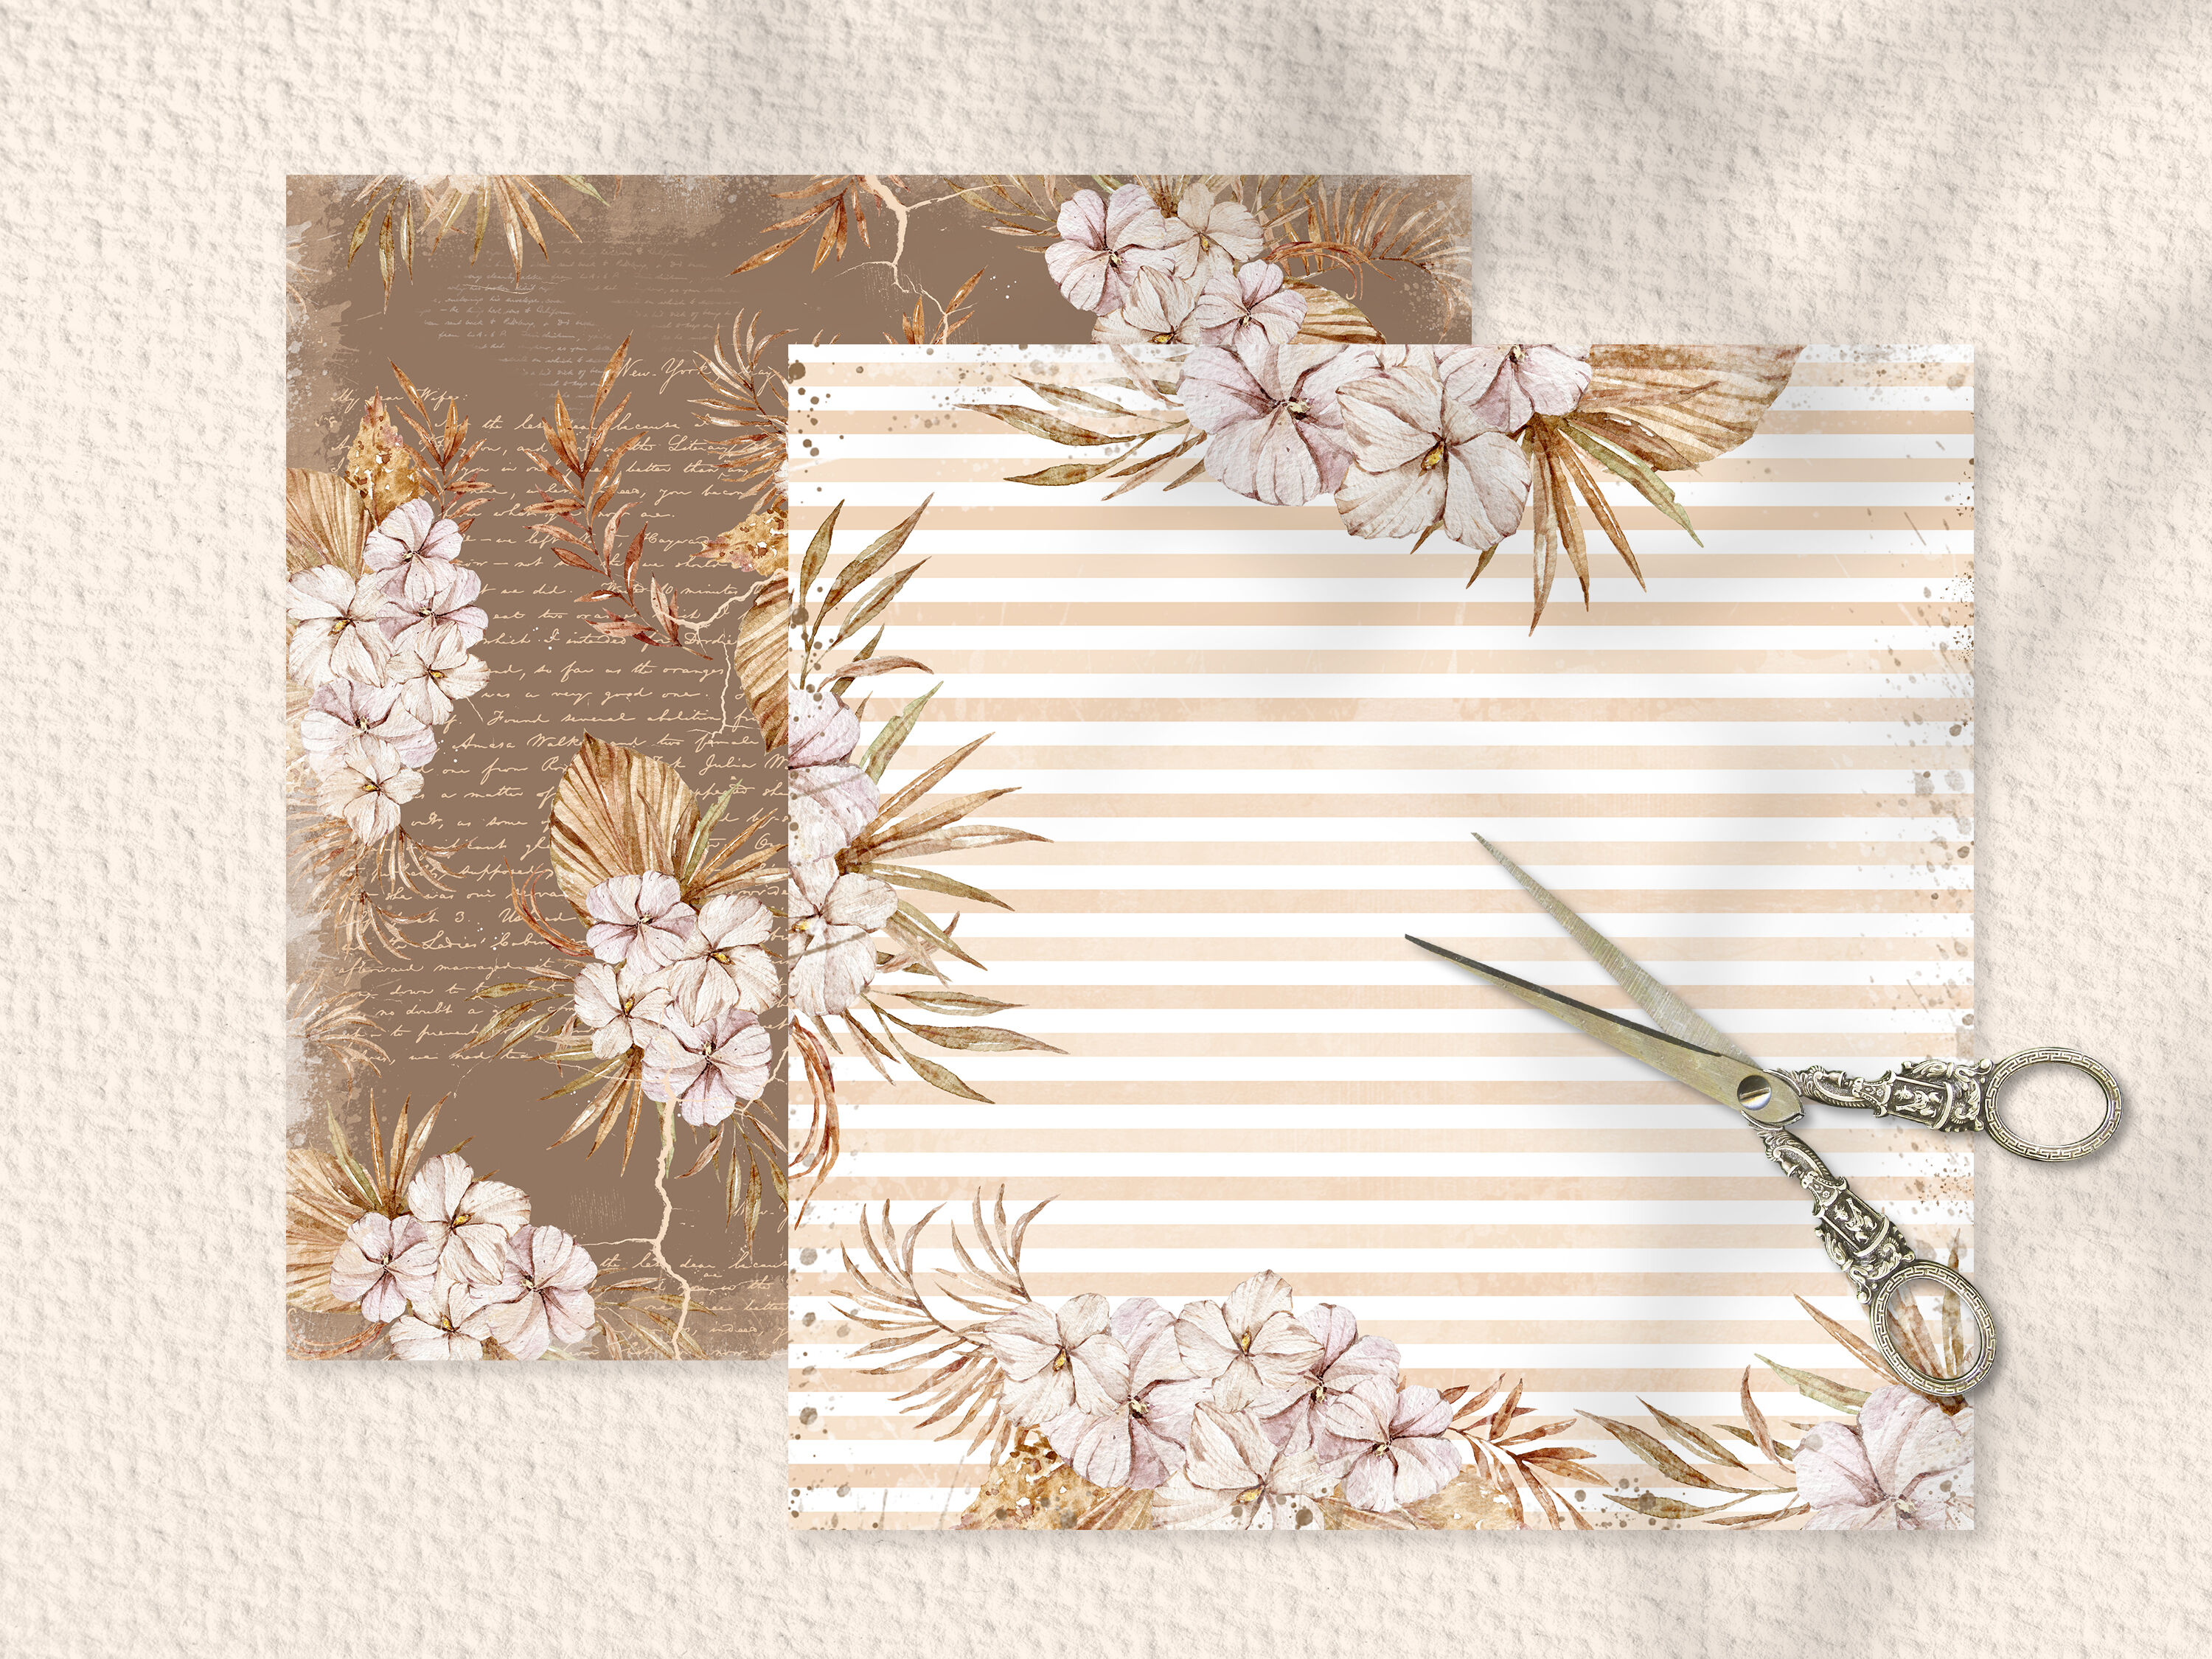 Boho floral scrapbook paper - digital paper - 12 JPEG files By Tiana Geo  Art